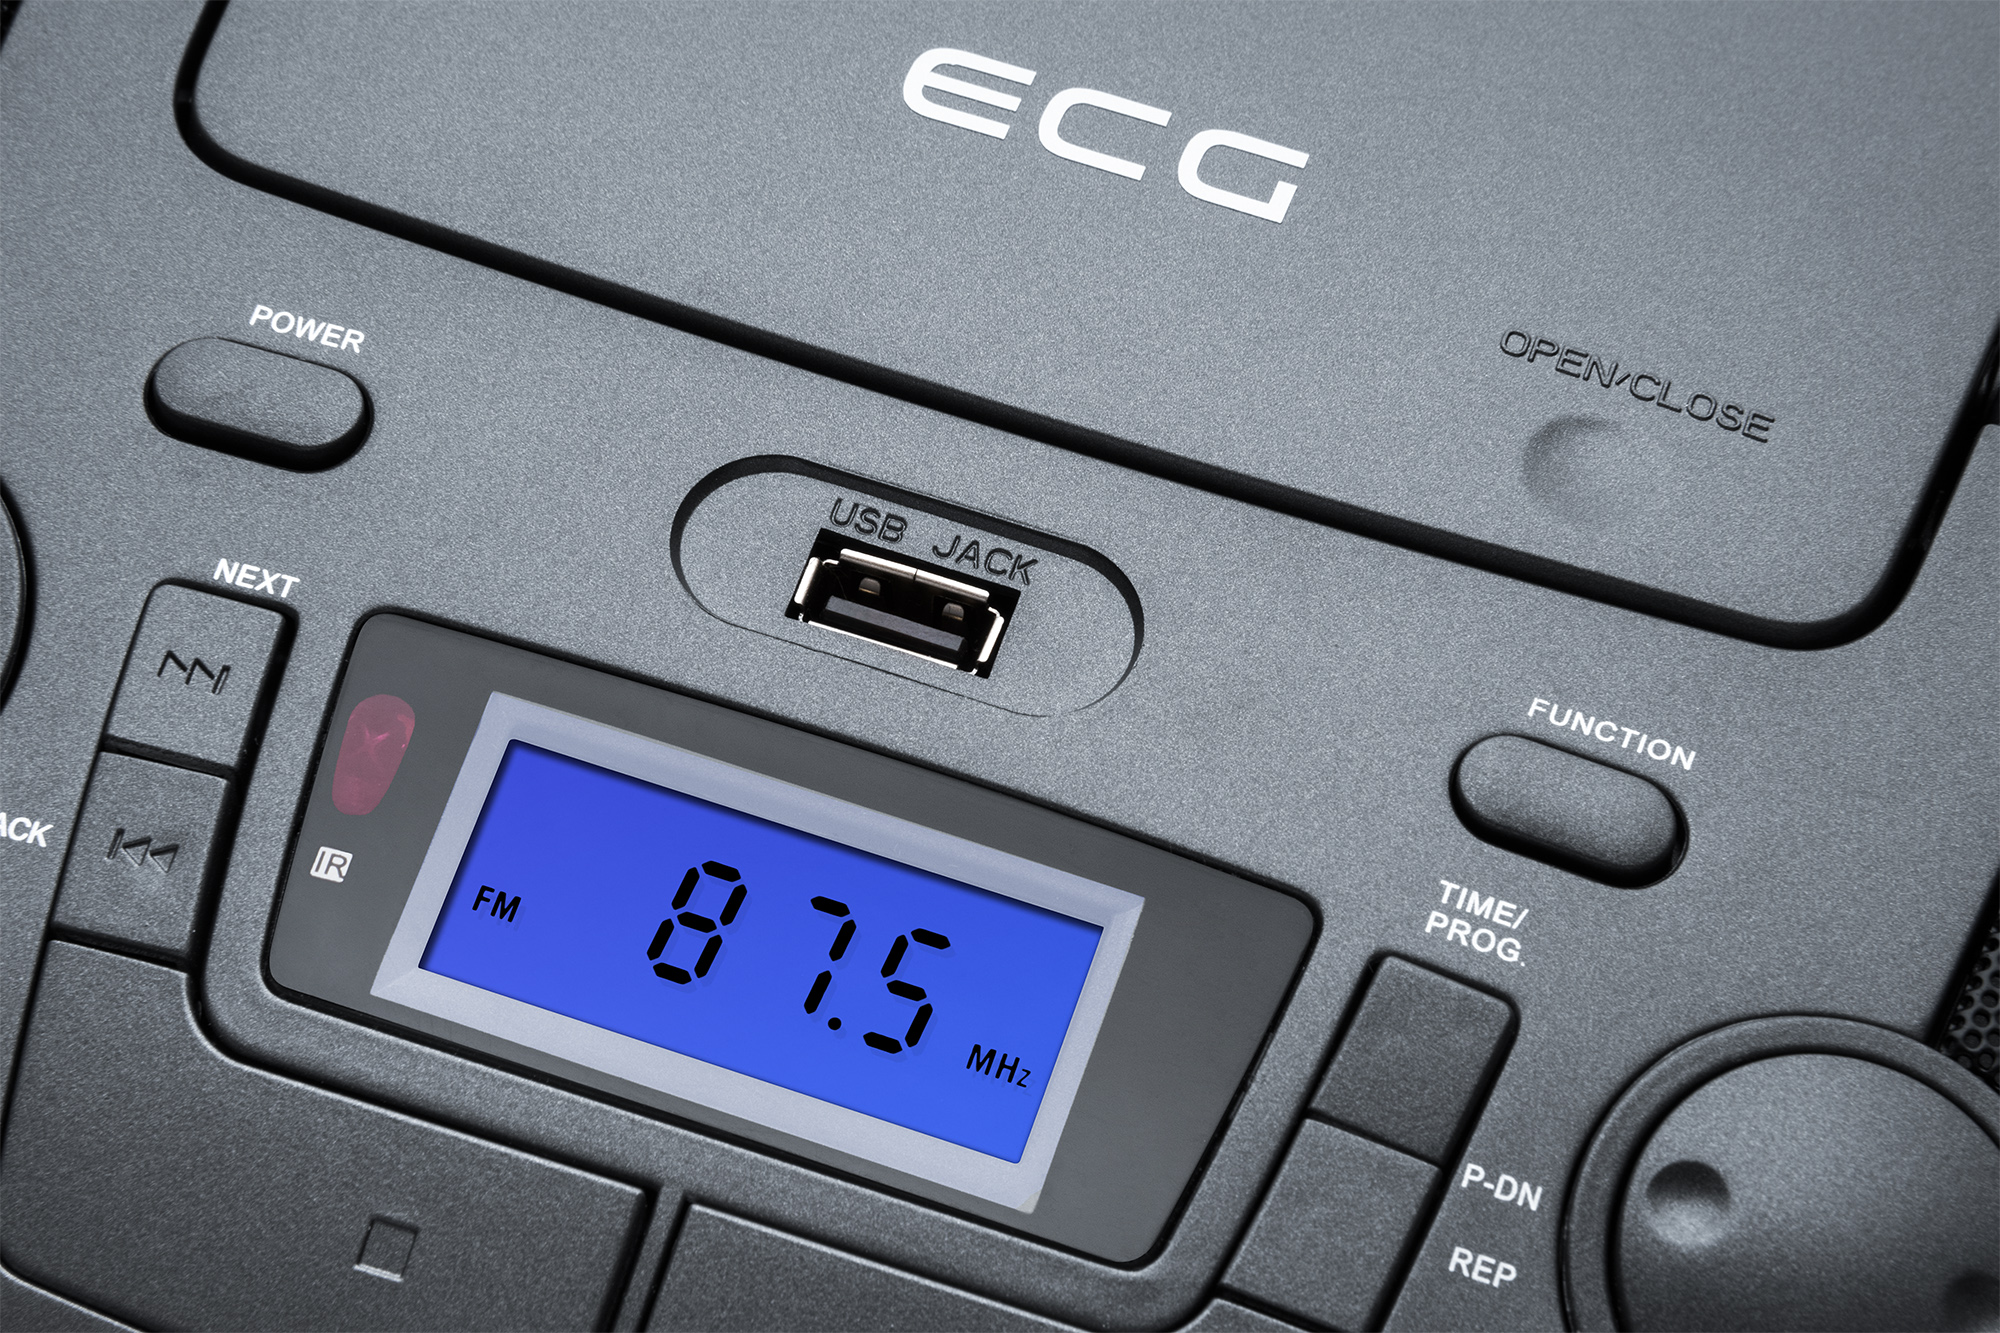 ECG CDR 1000 U Fernbedienung CD, Titan | CD-R/RW, | mit Titan mit CD-Player | AUX | | | | Radio USB CD-Radio USB MP3